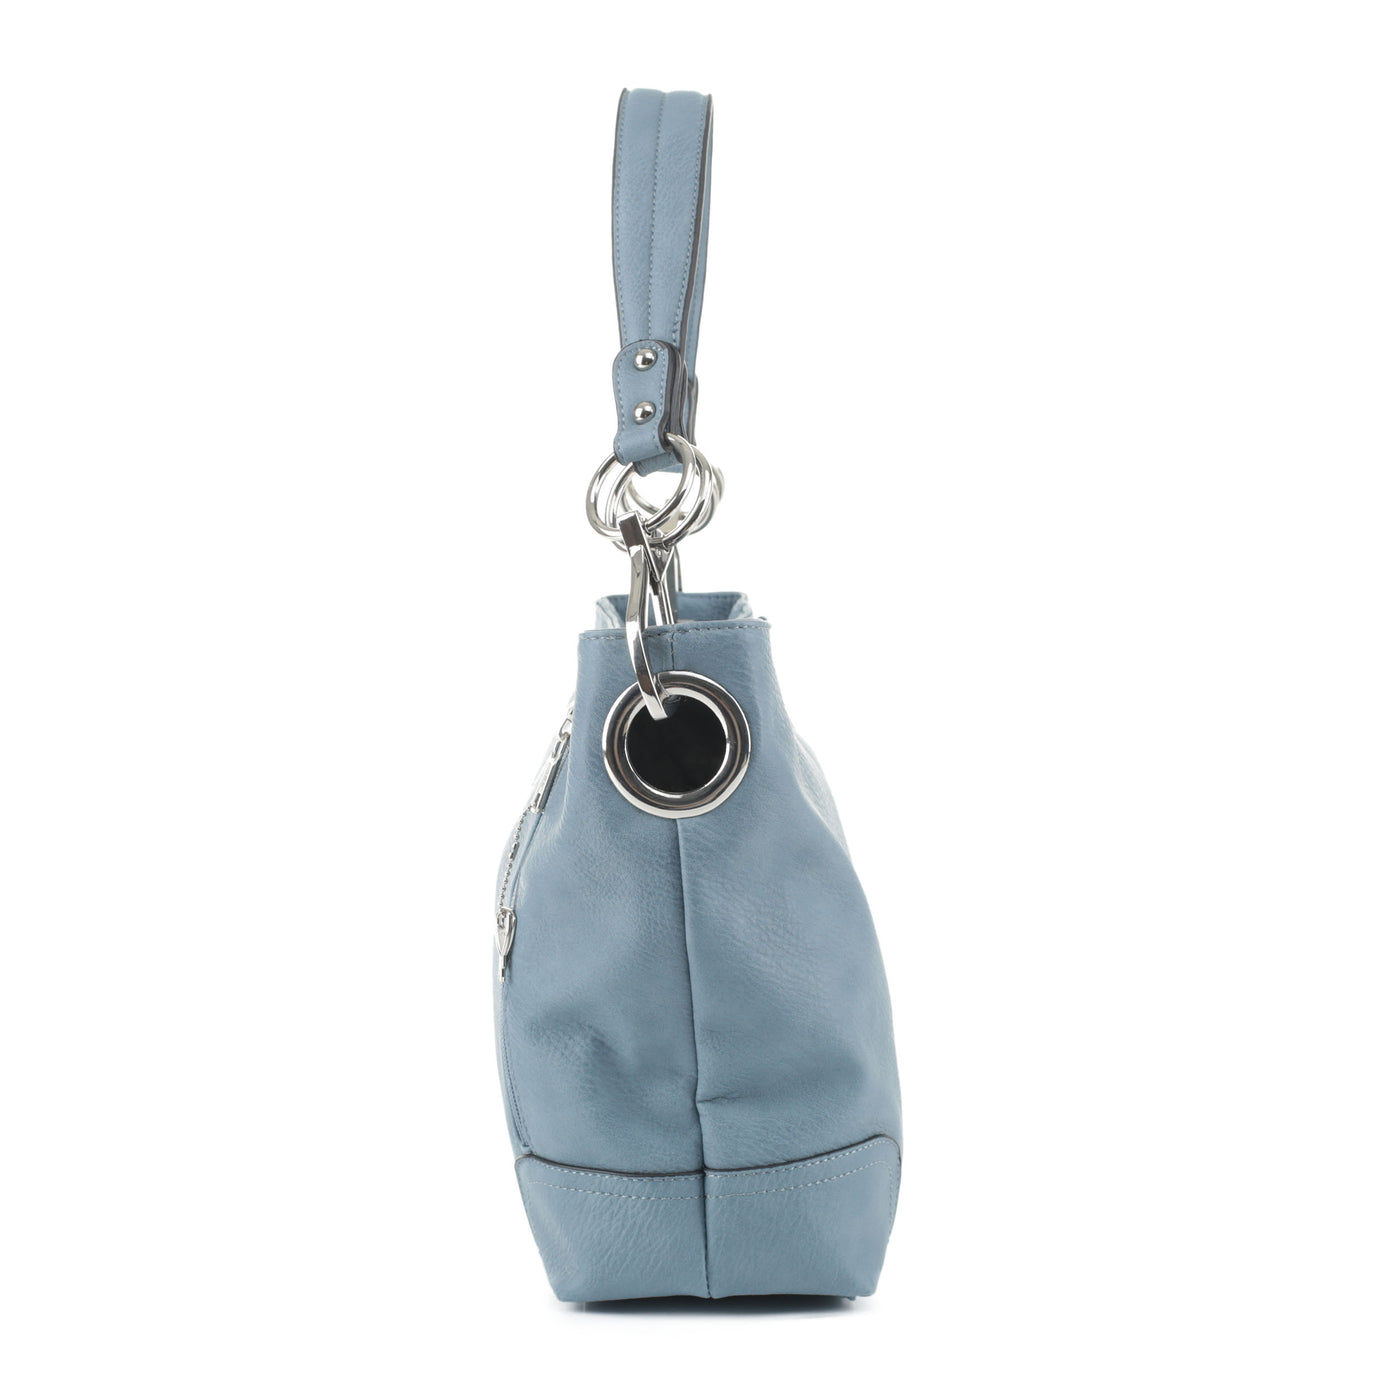 Lydia Lock and Key Hobo Shoulder Bag - JessieJames Handbags